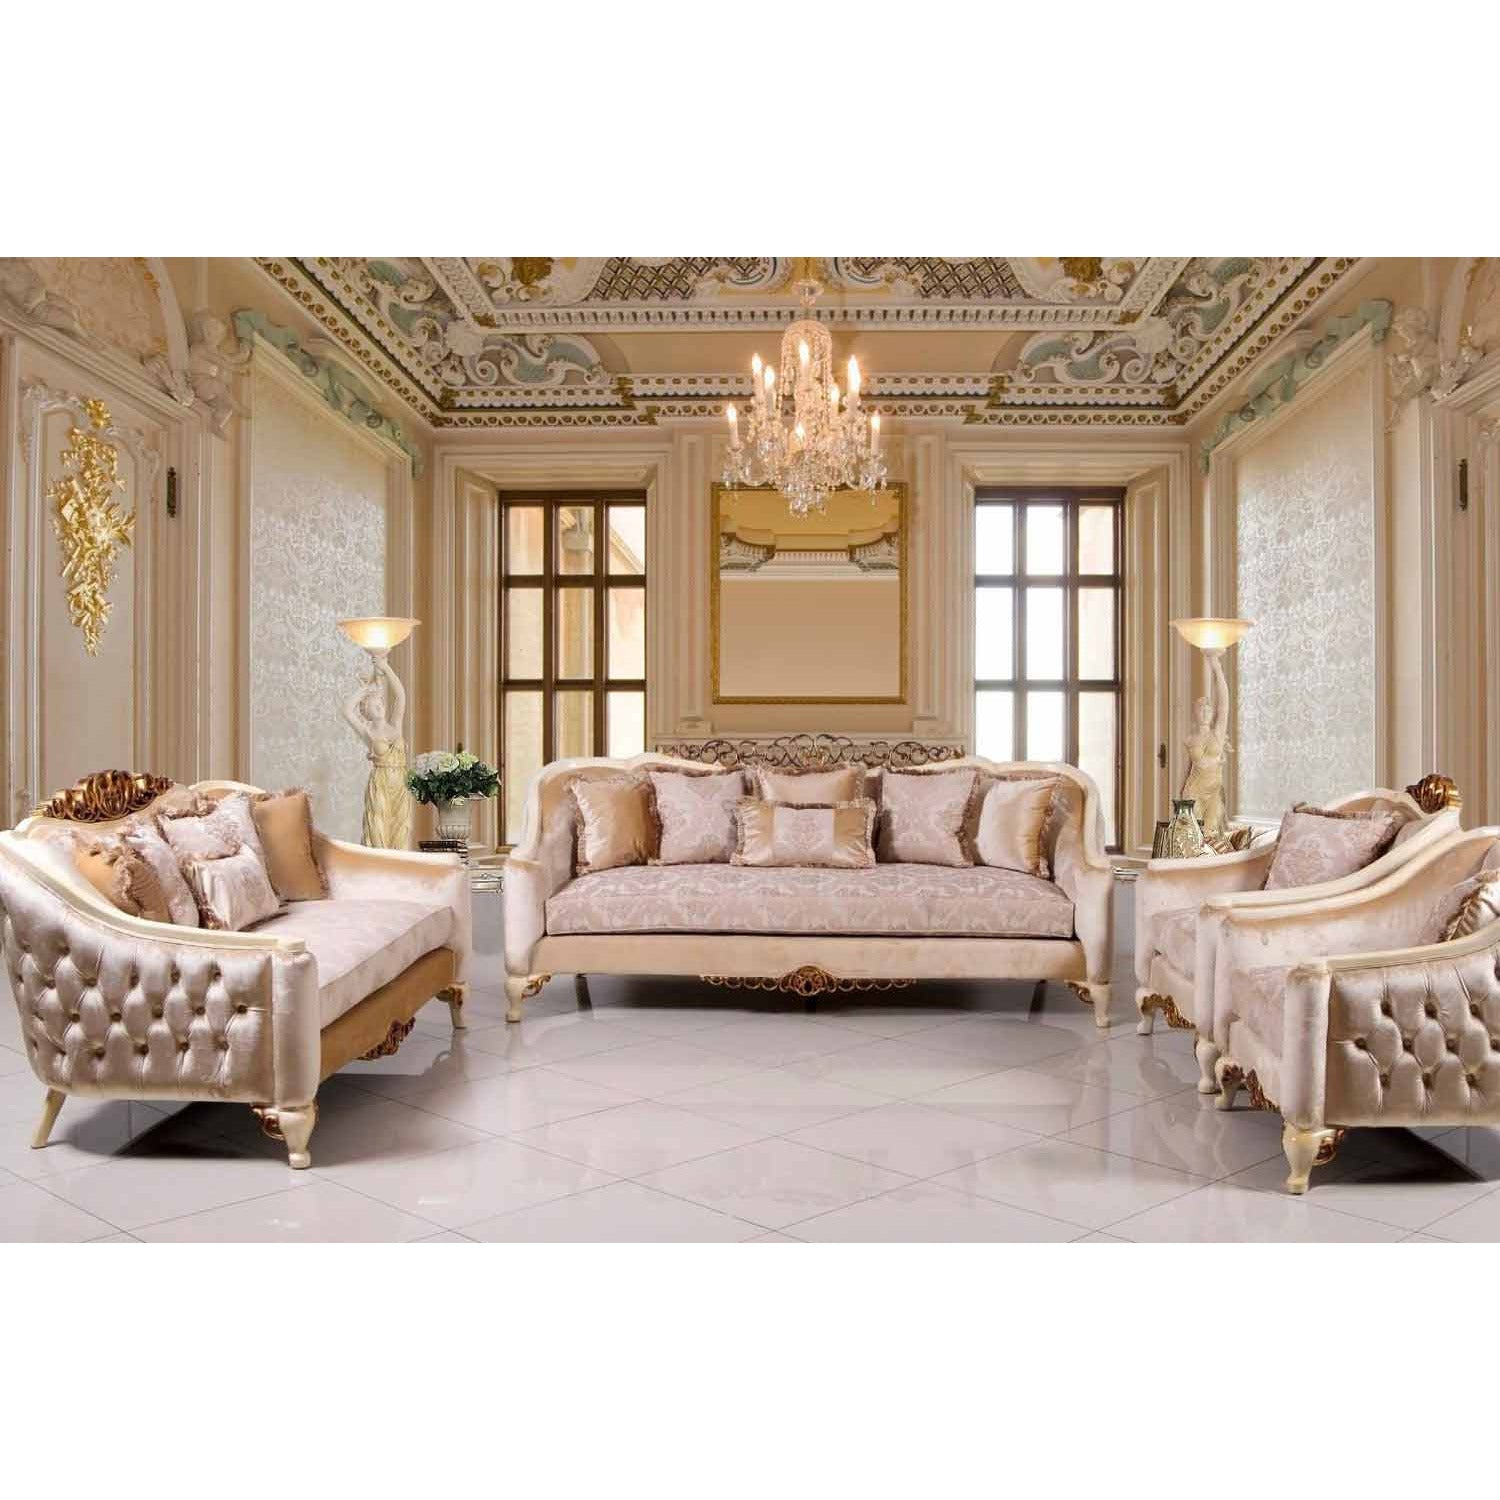 European Furniture - Angelica Chair in Beige & Gold - 45350-C - New Star Living